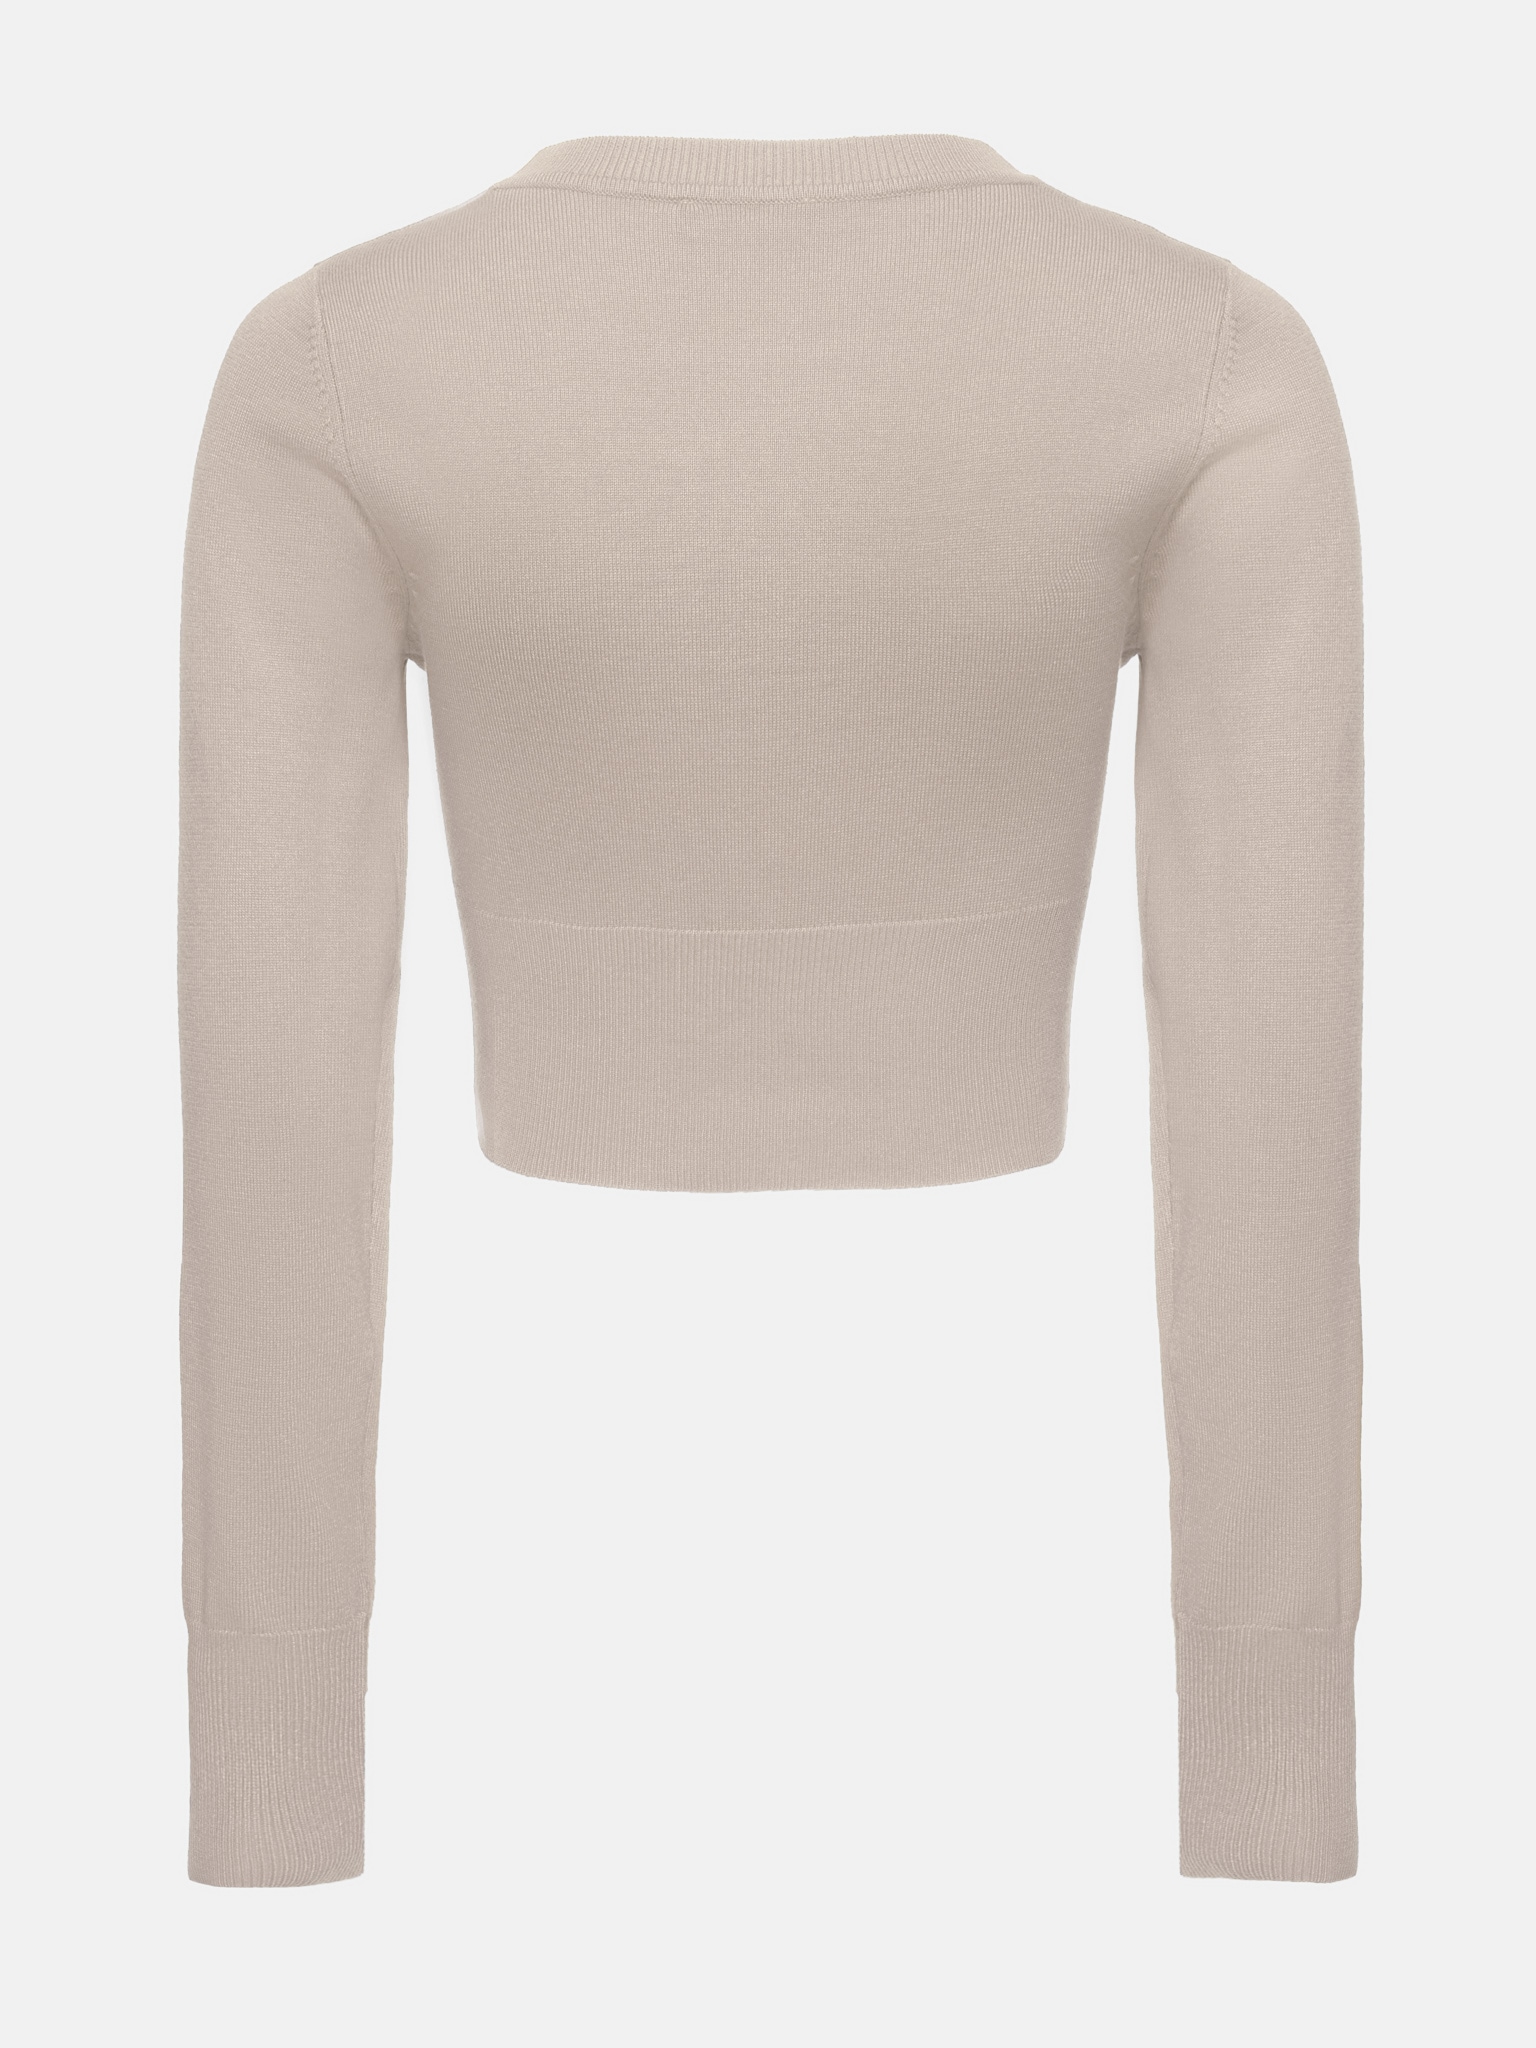 LICHI - Online fashion store :: Long-sleeve jersey crop top